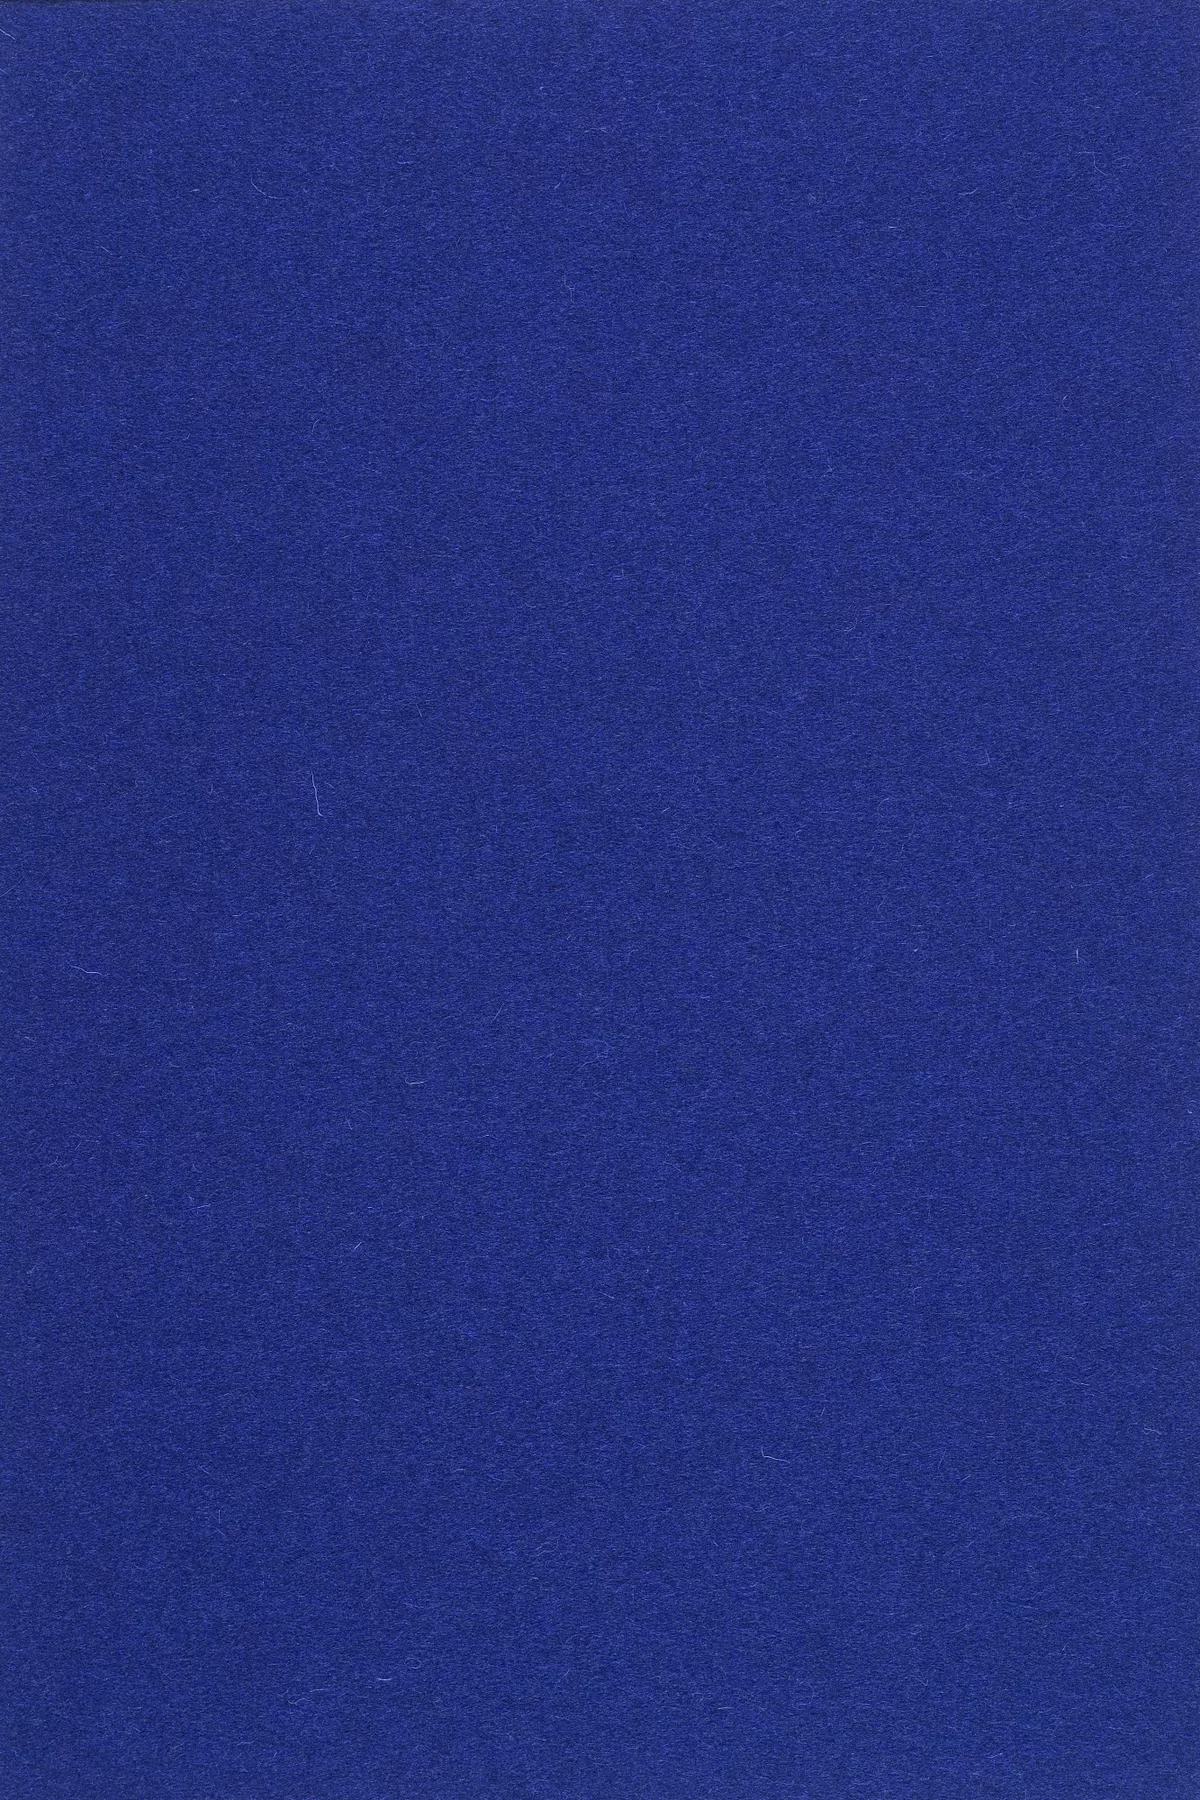 Fabric sample Divina 3 791 blue